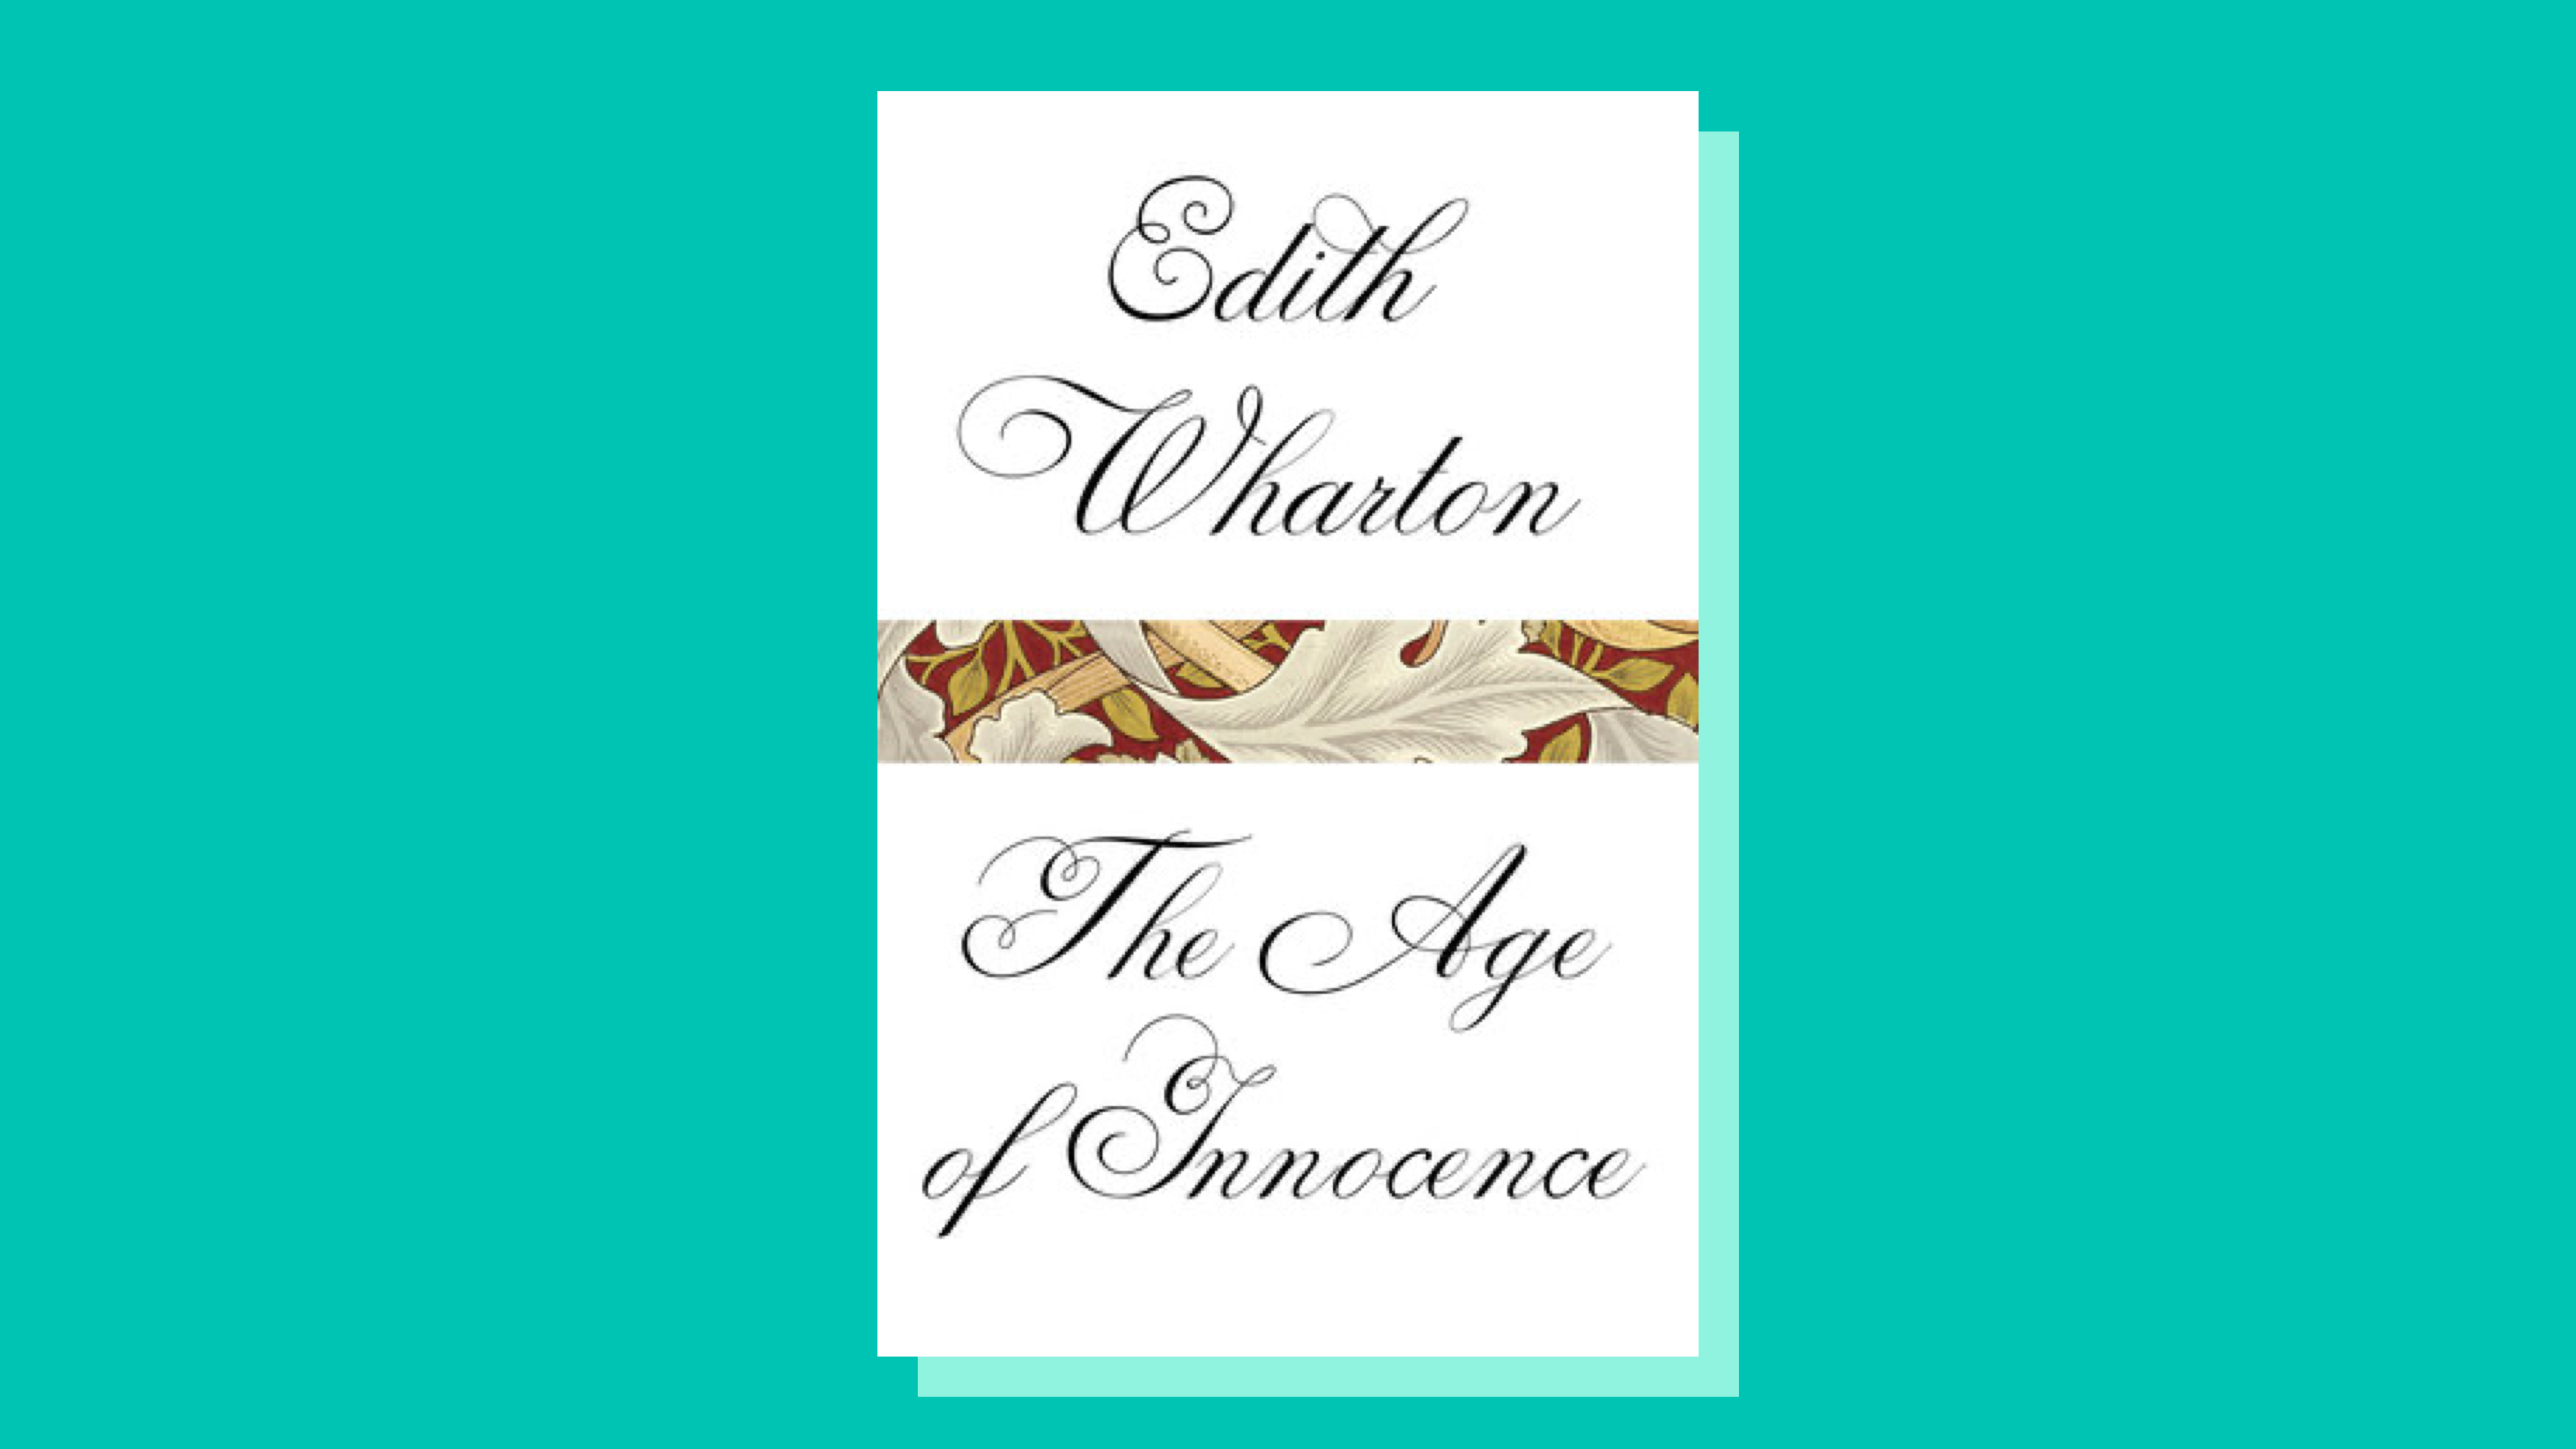 “The Age of Innocence” by Edith Wharton